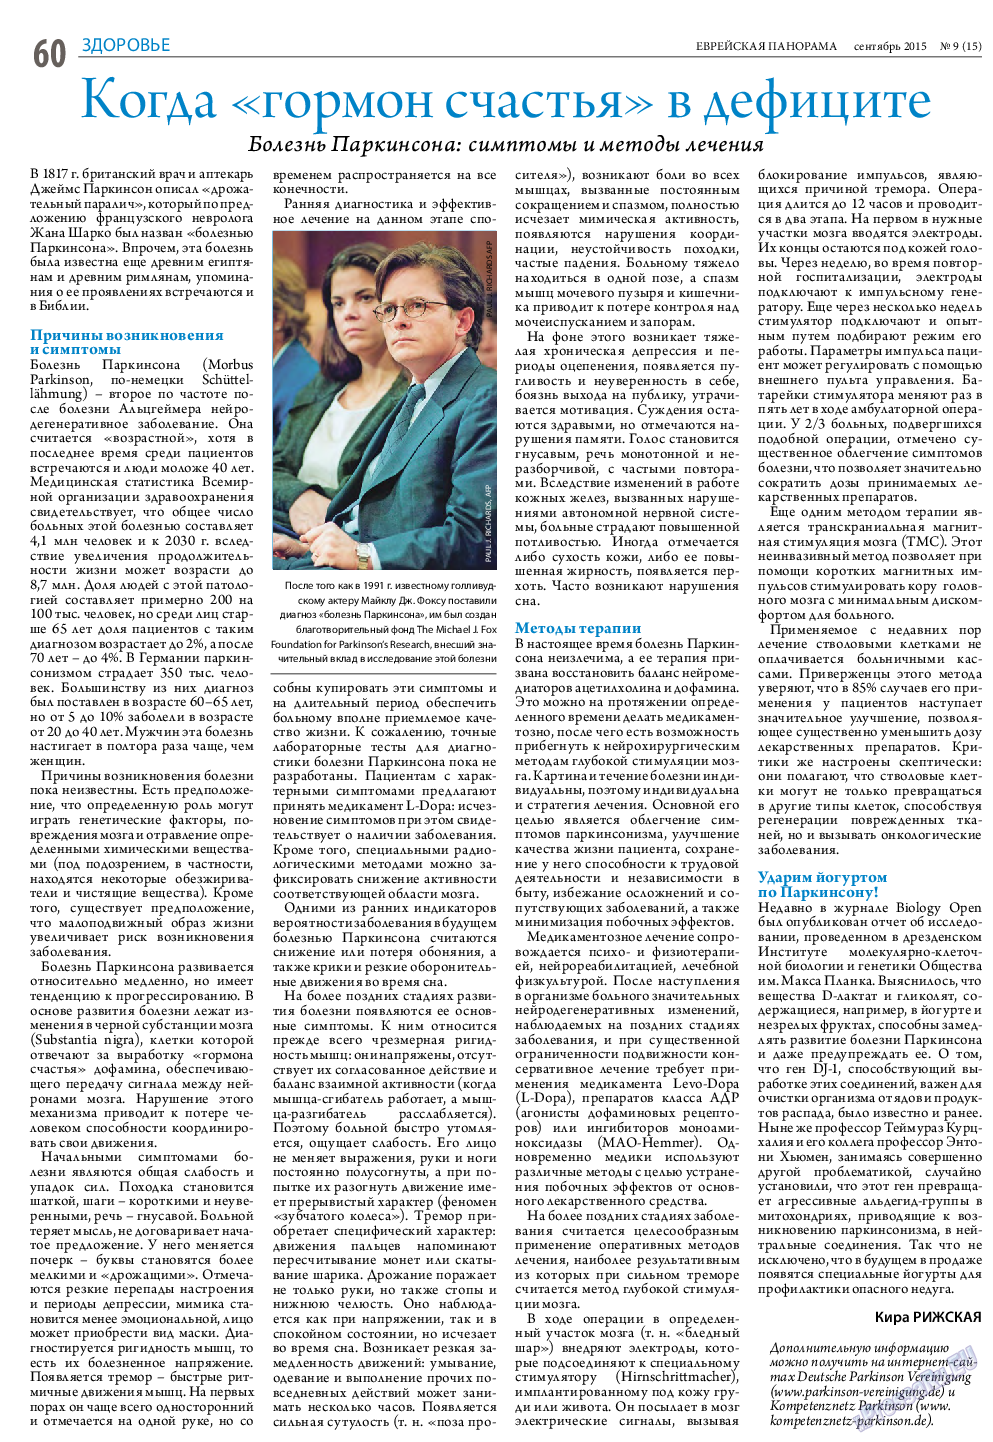 Еврейская панорама, газета. 2015 №9 стр.60